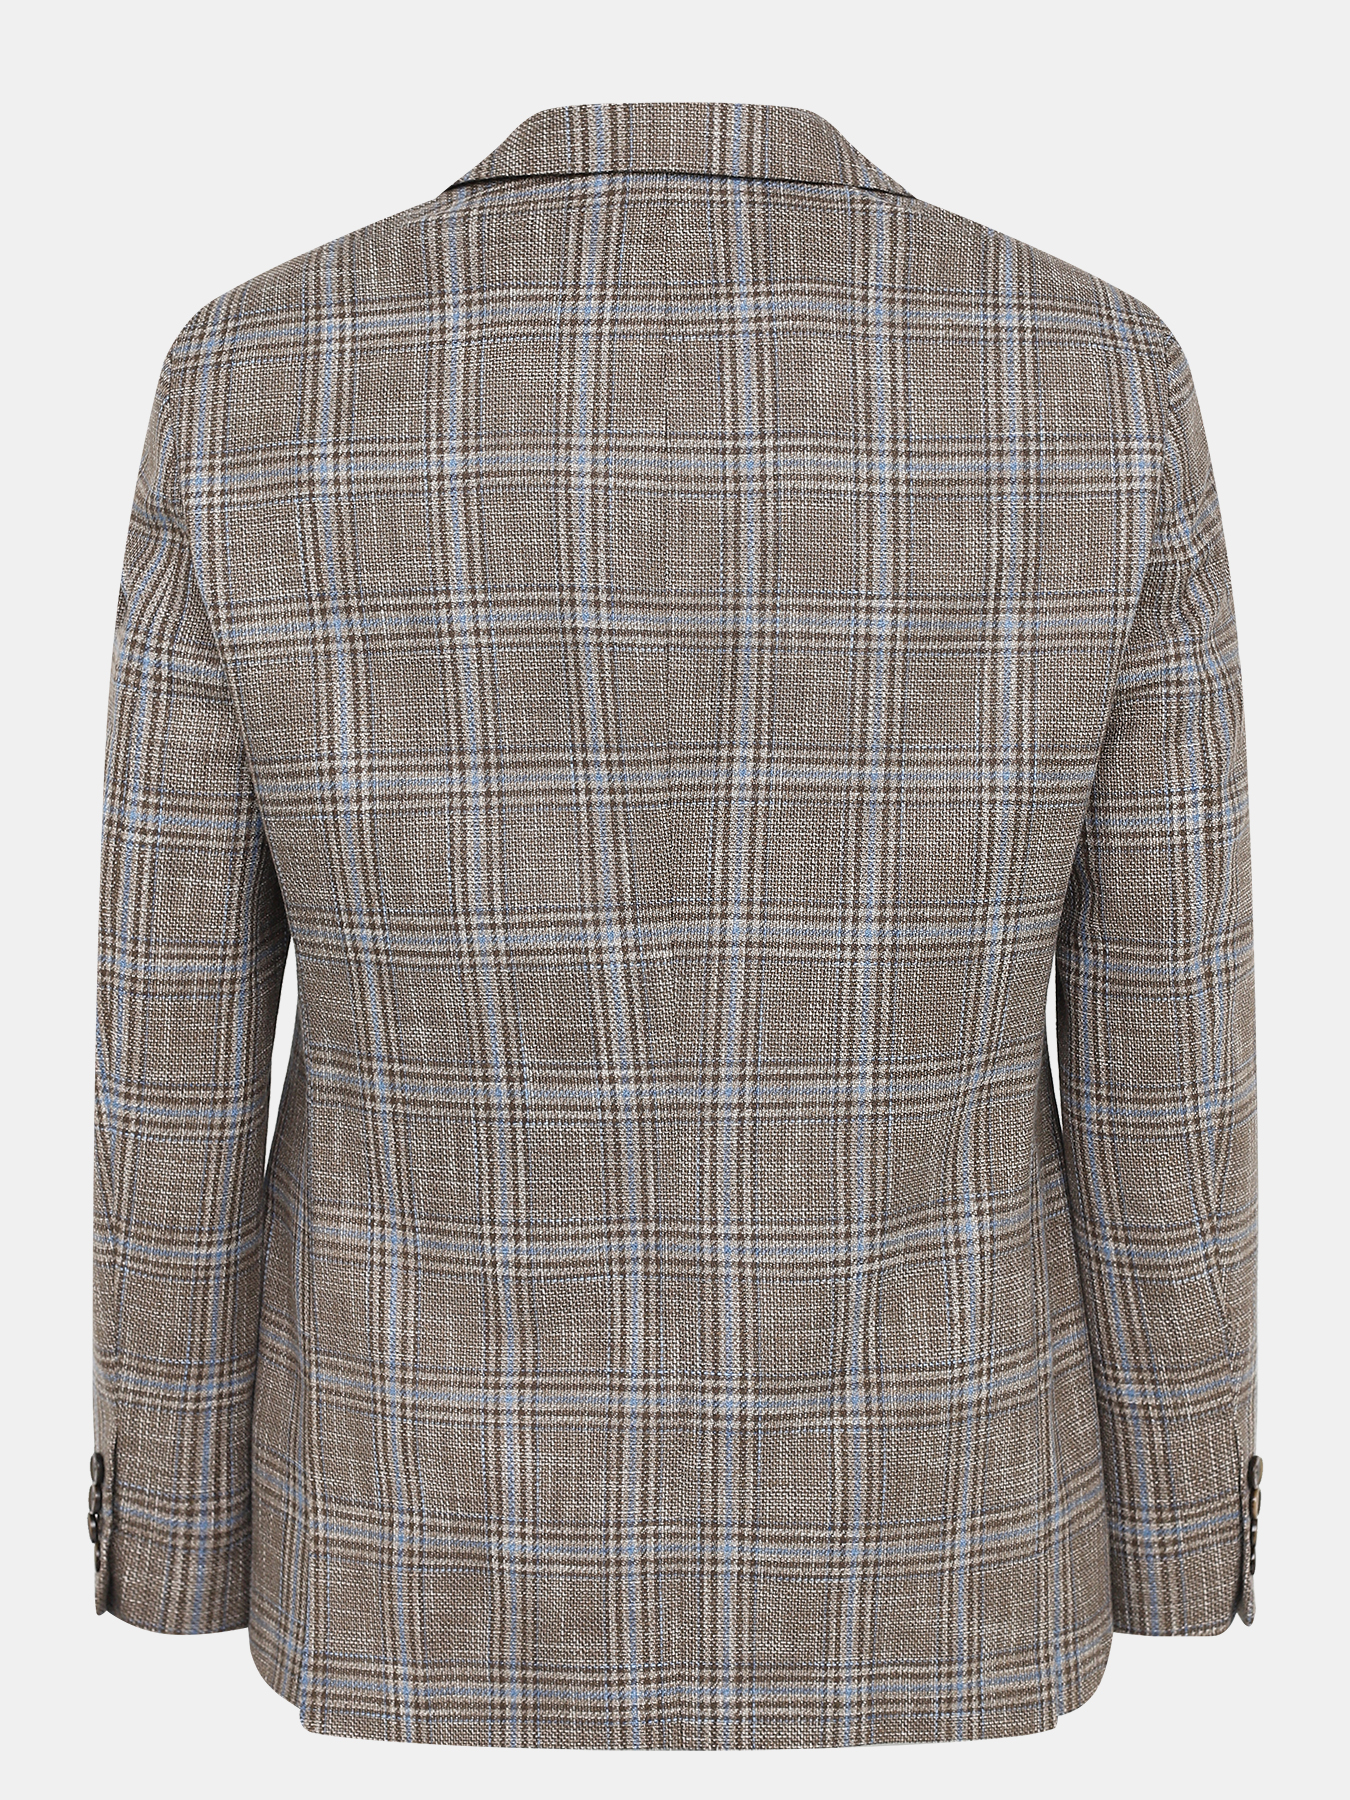 Пиджак Alessandro Manzoni 396179-074, цвет коричневый, размер 54 - фото 2